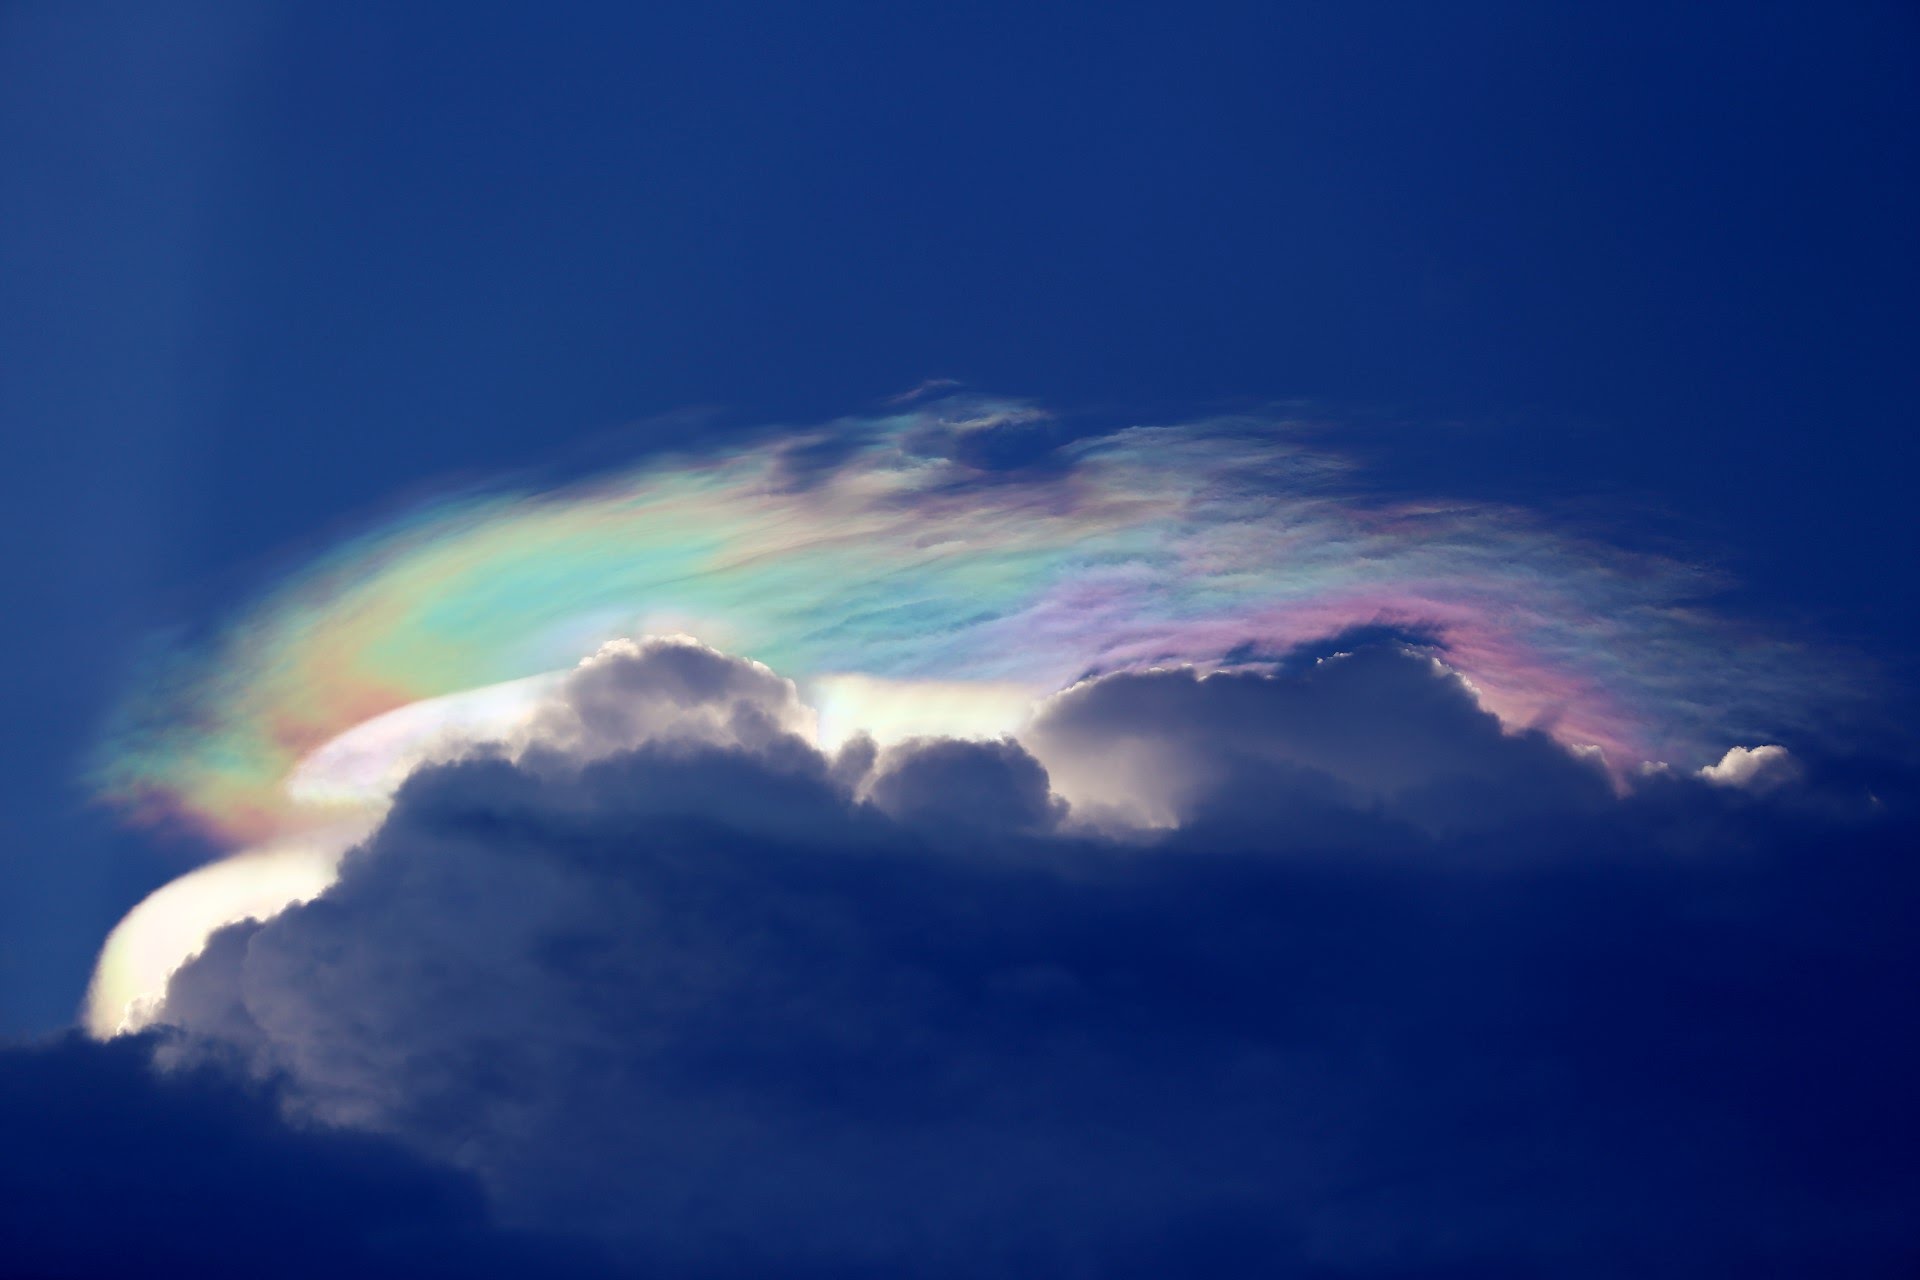 Cloud Iridescence (Rainbow clouds) in Singapore - 30 Jan 2015 - YouTube